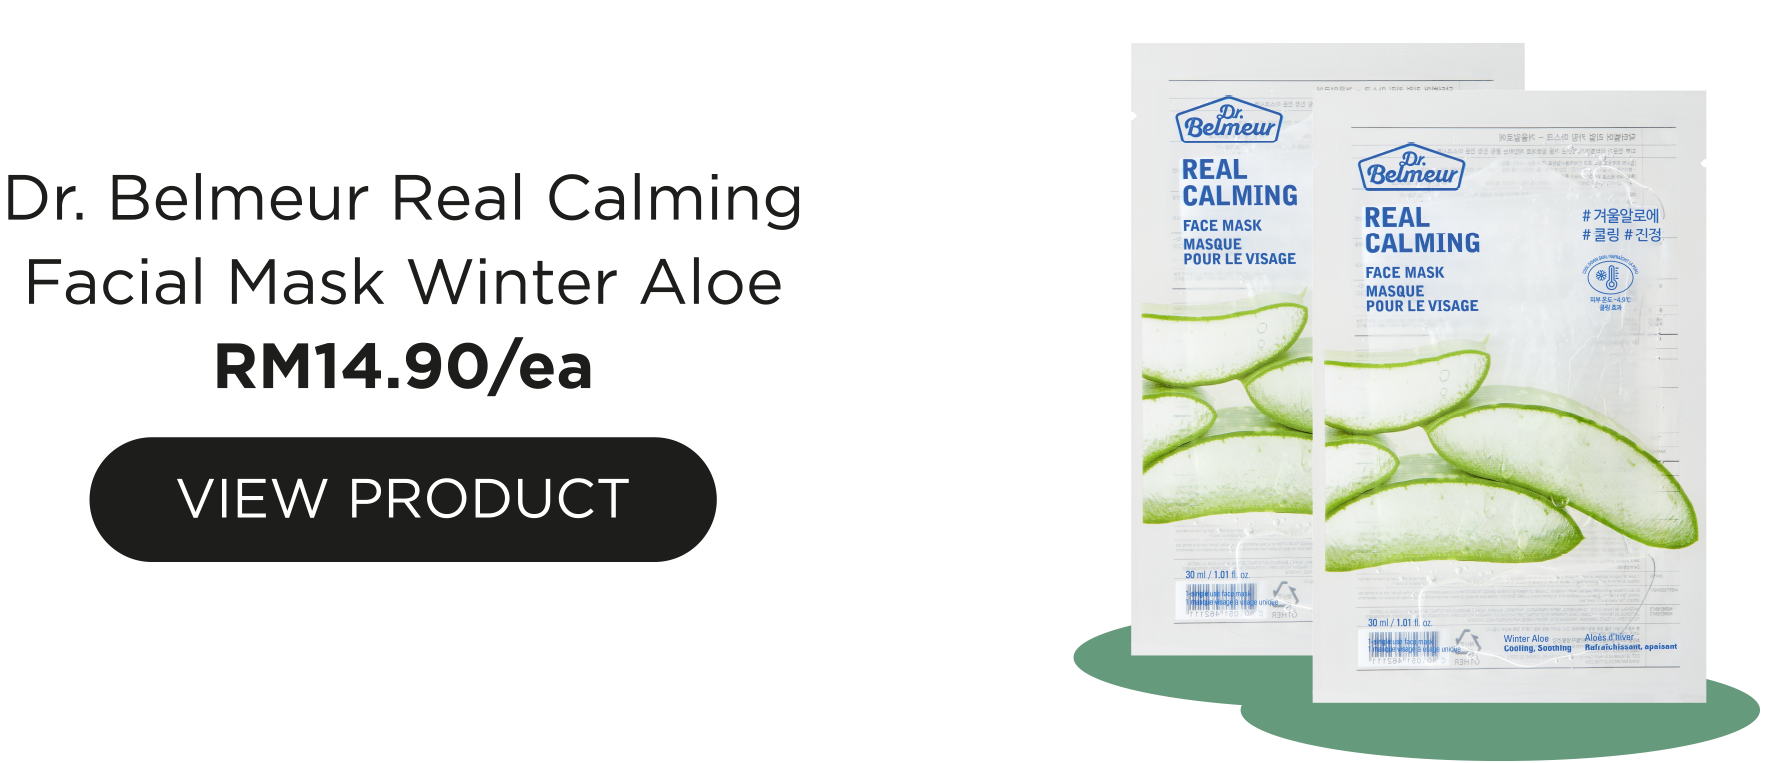 Dr Belmeur Real Calming Facial Mask Winter Aloe